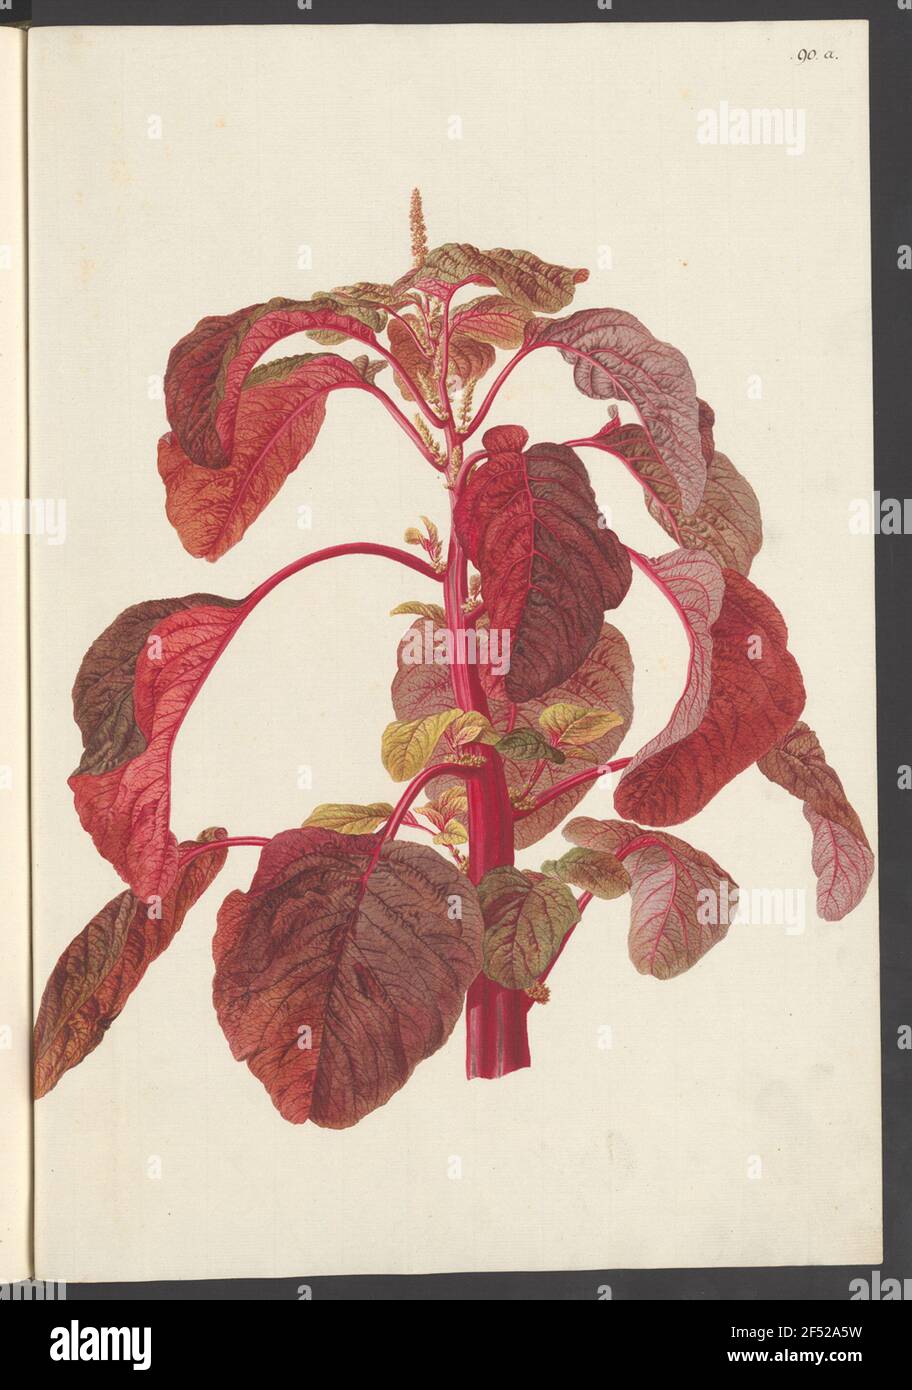 Amaranthus vividus, Blatt 90a Foto de stock